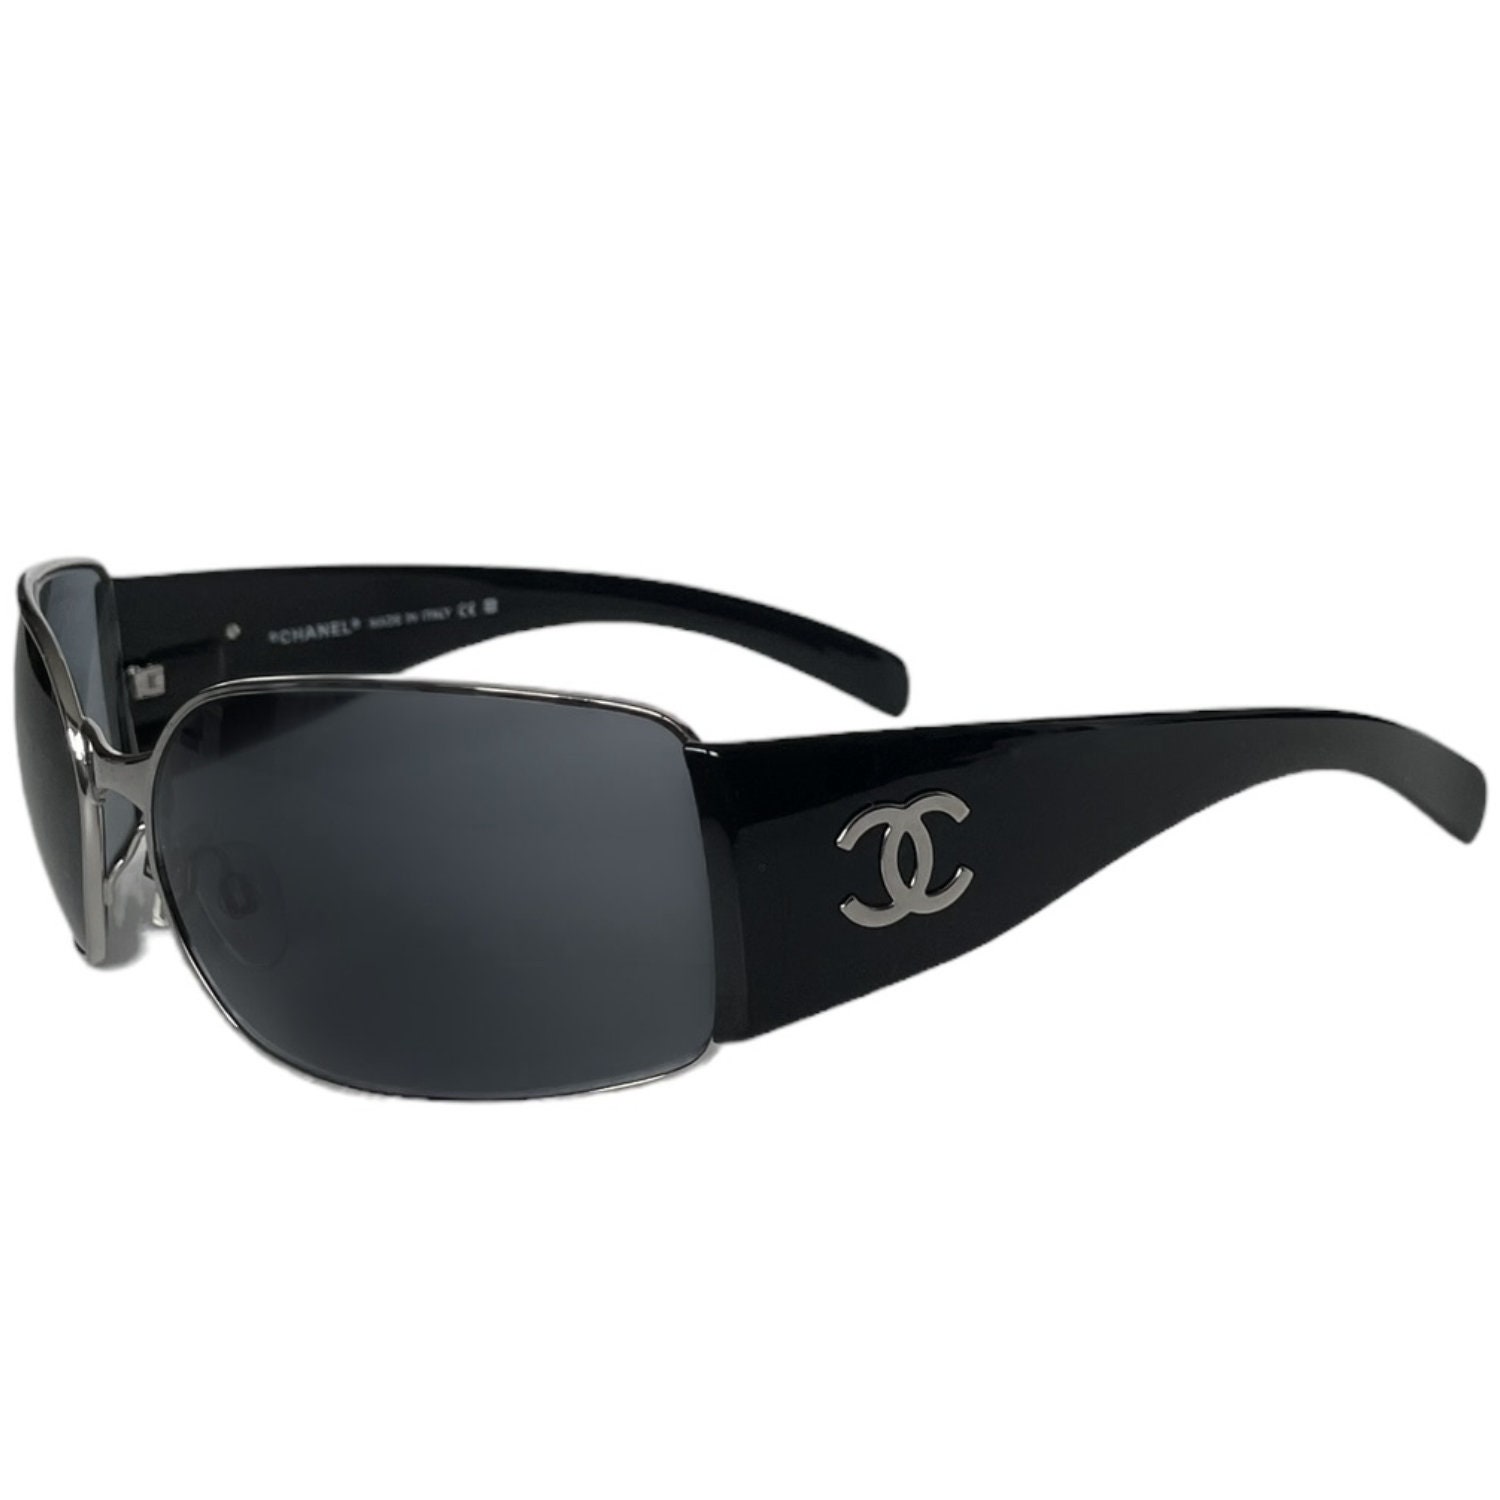 Chanel Sunglasses Authentic Chanel Logo Wraparound Ski 